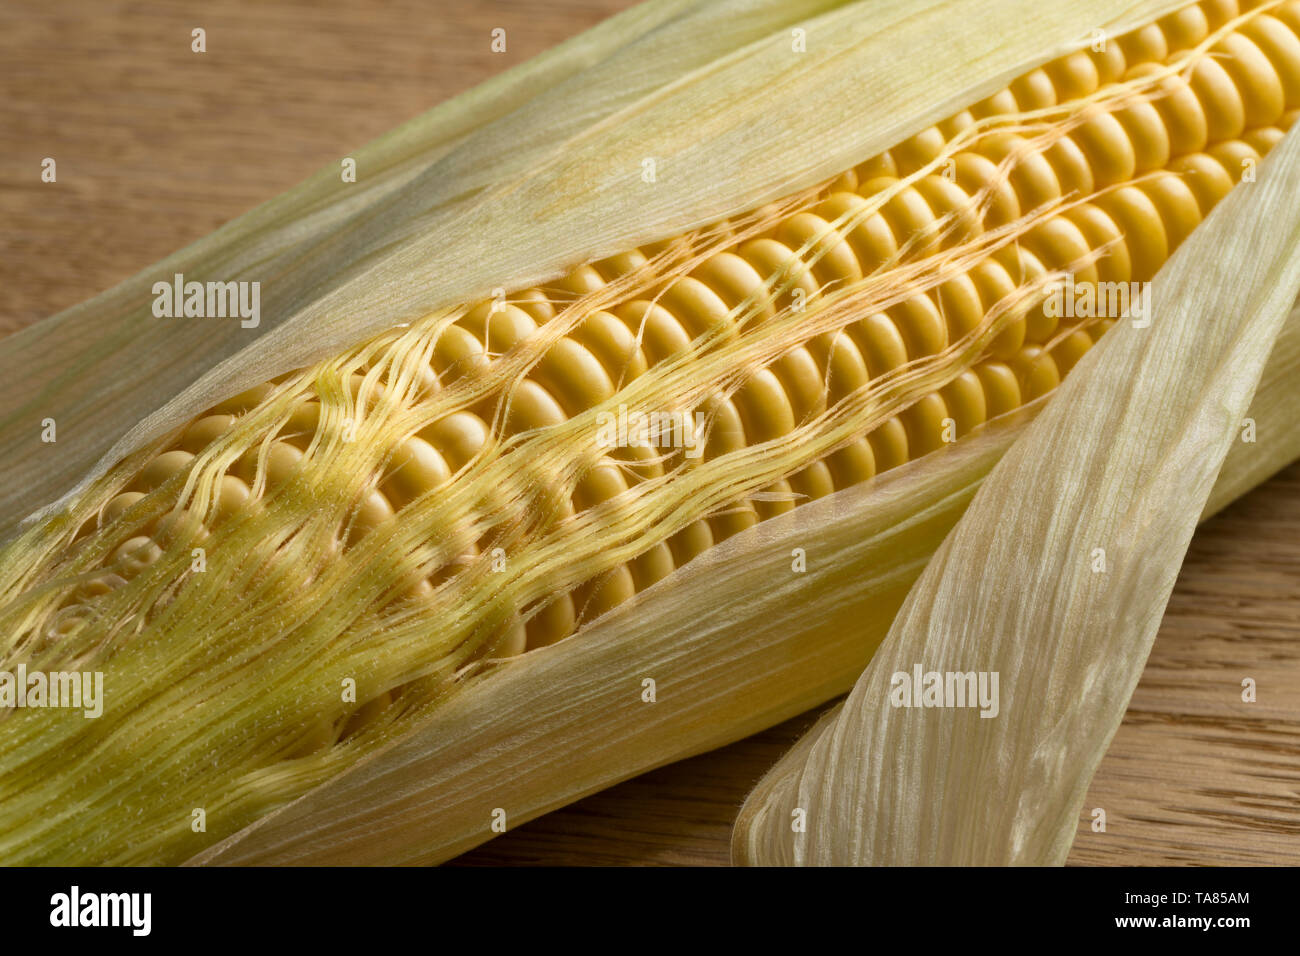 Corn on the cob and corn silk close up Stock Photo